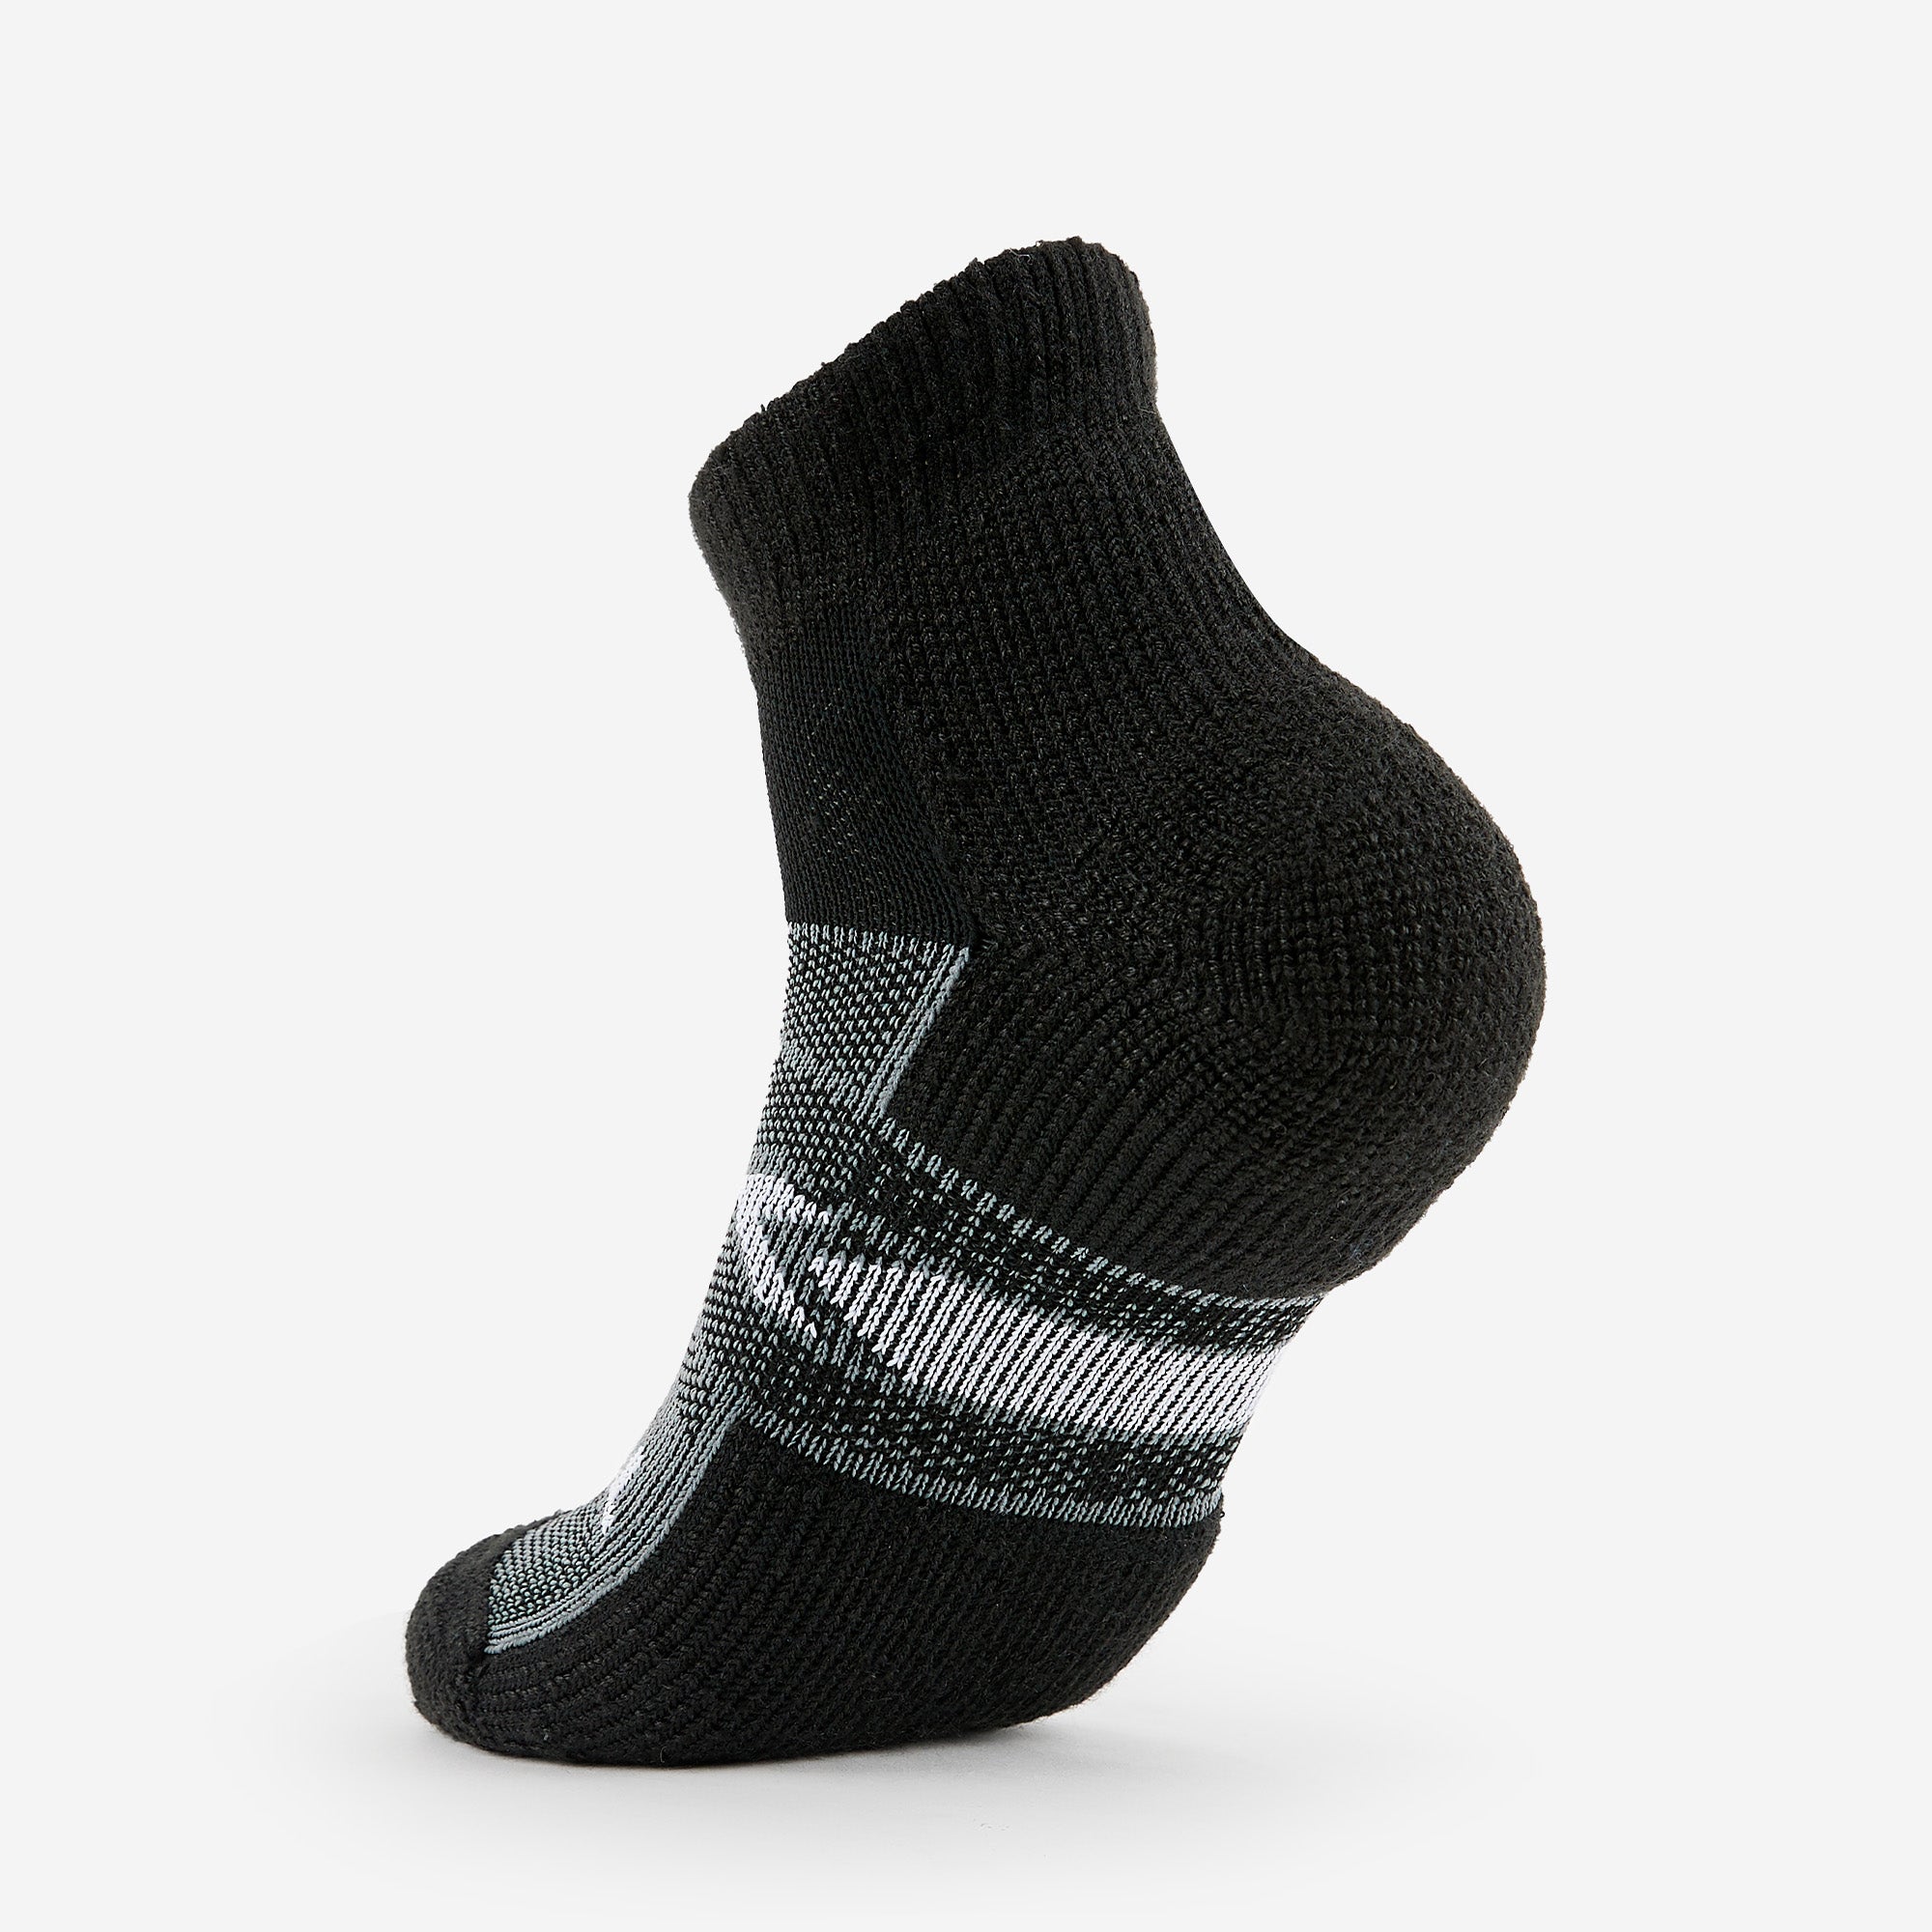 Dynamocks Shaolin Shoe Unisex Quarter Ankle Length Socks